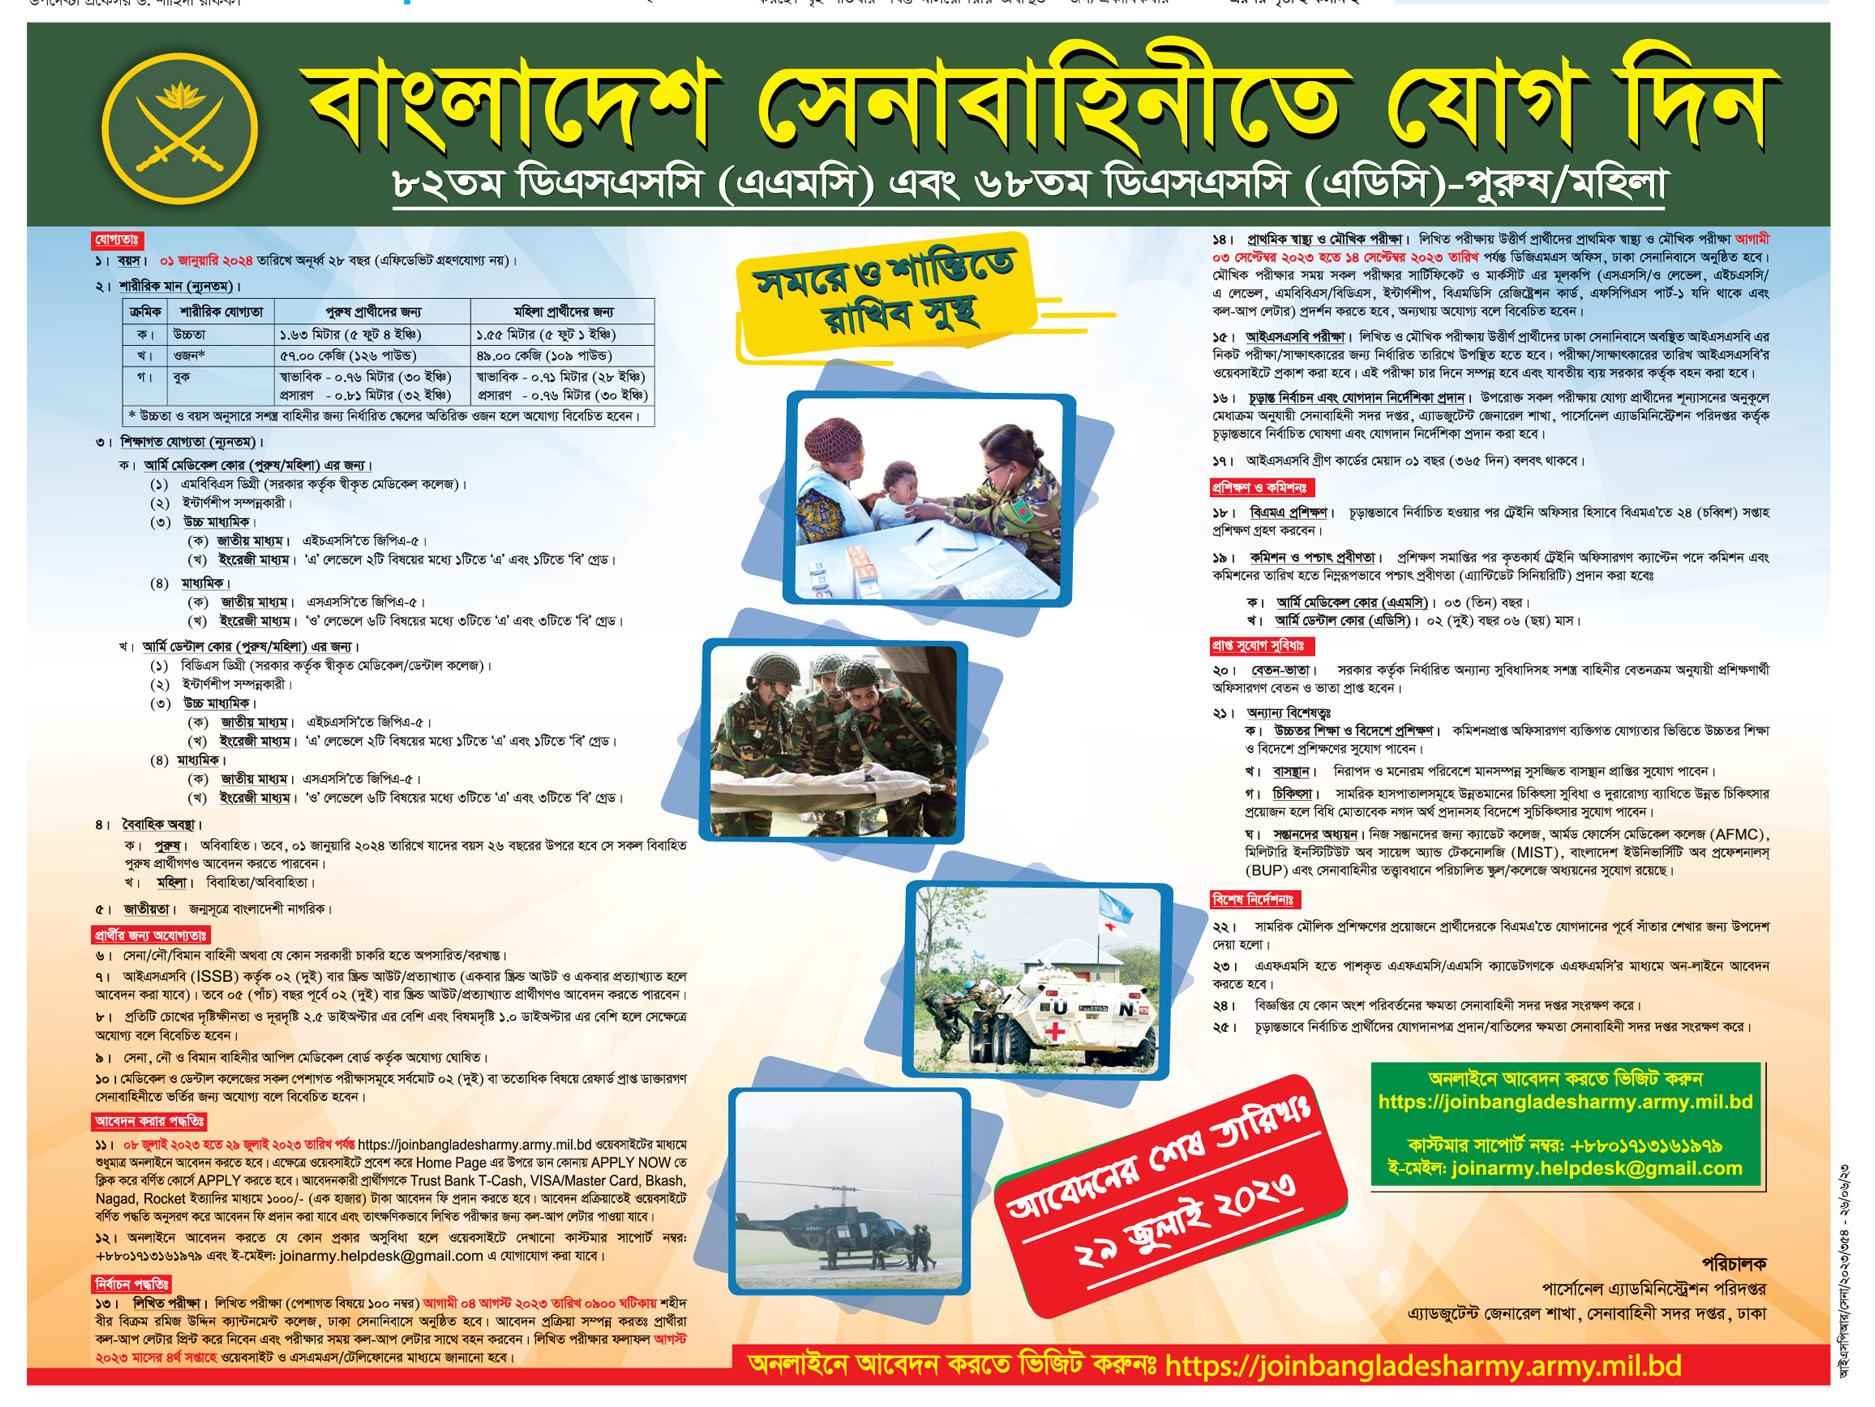 Bangladesh army job circular for Medical professionals | govt job bd